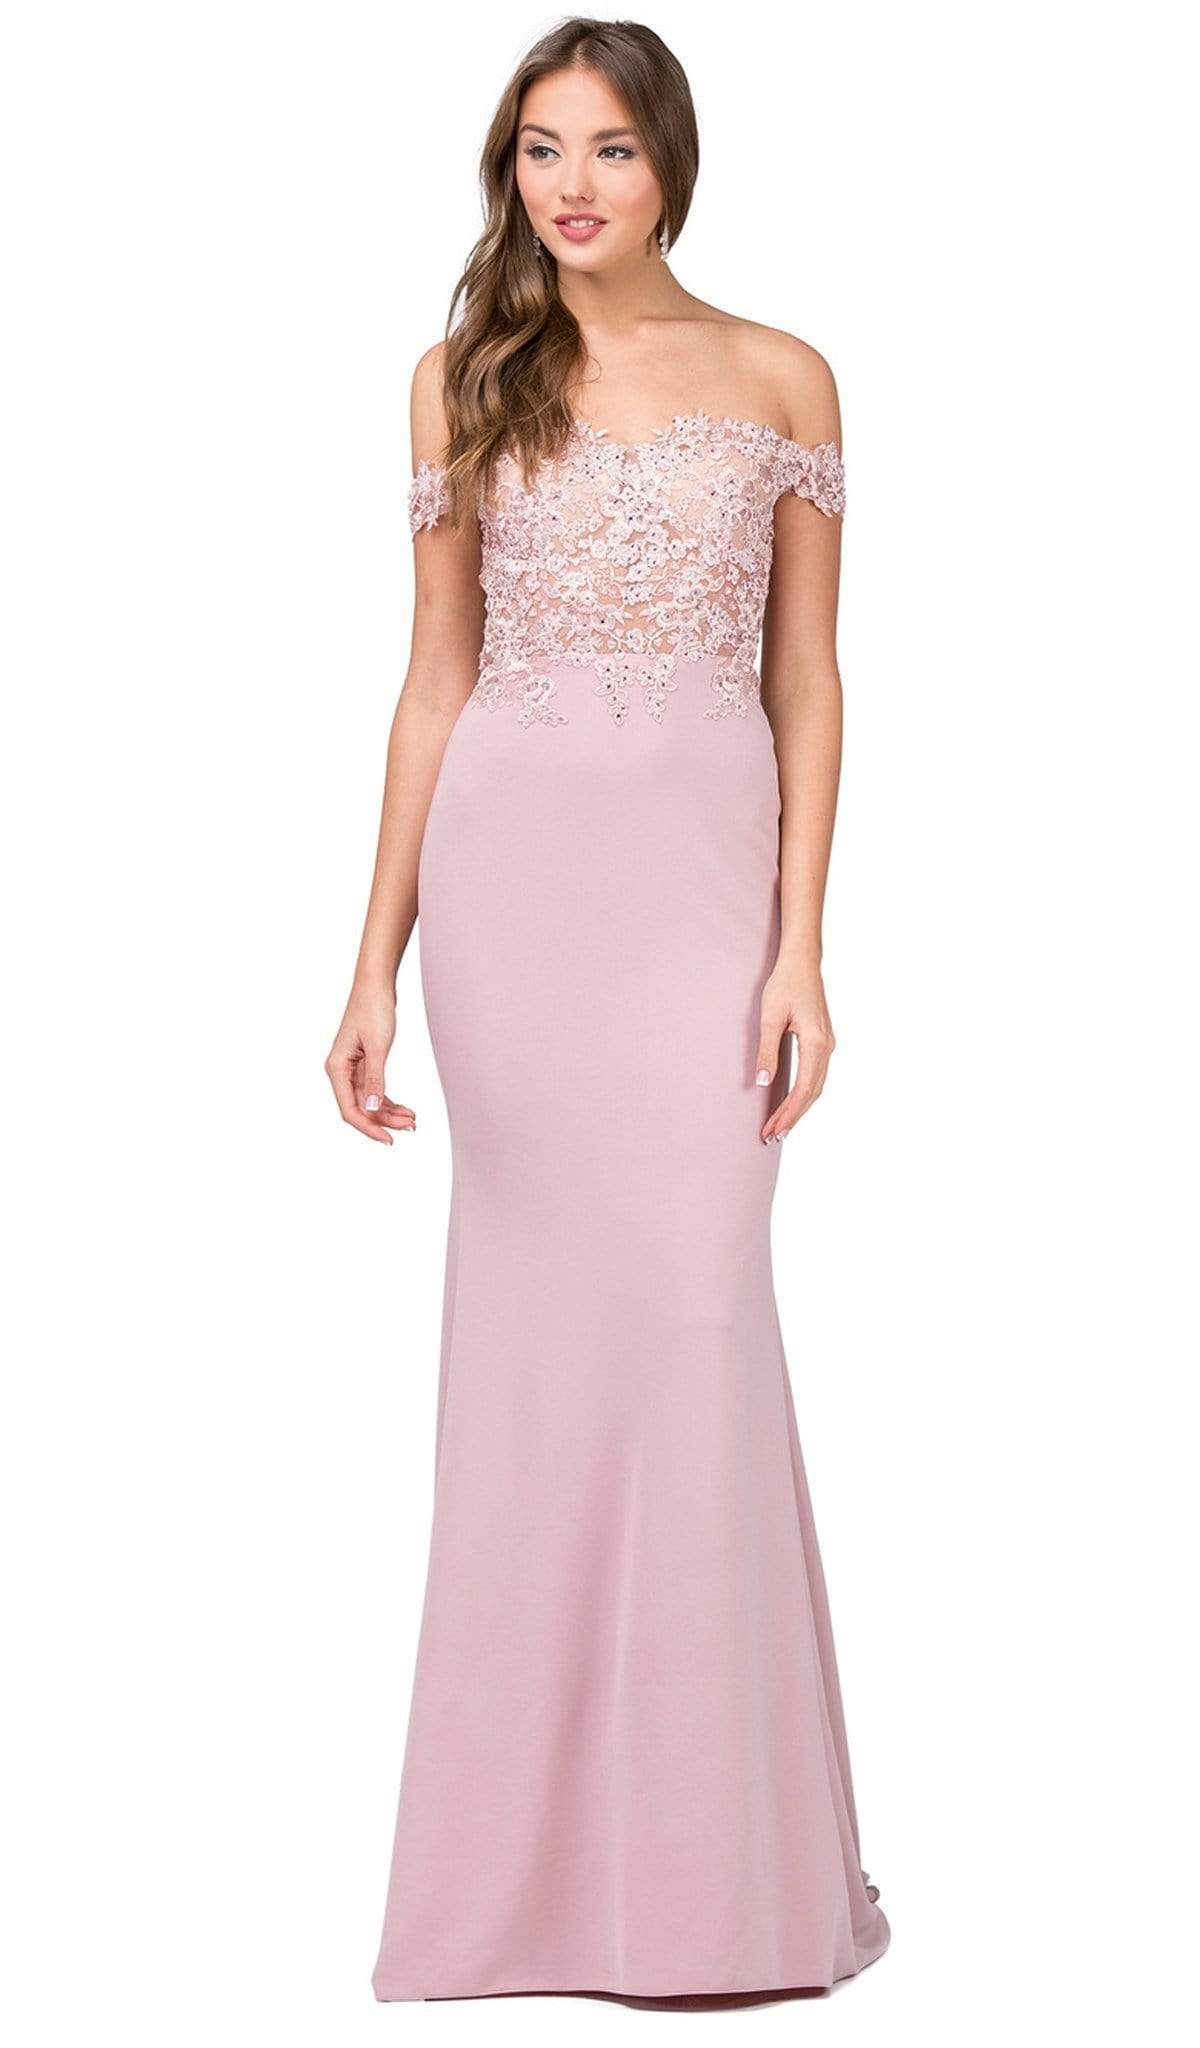 Dancing Queen - 2274 Sheer Floral Embroidered Off Shoulder Prom Dress Evening Dresses L / Dusty Pink